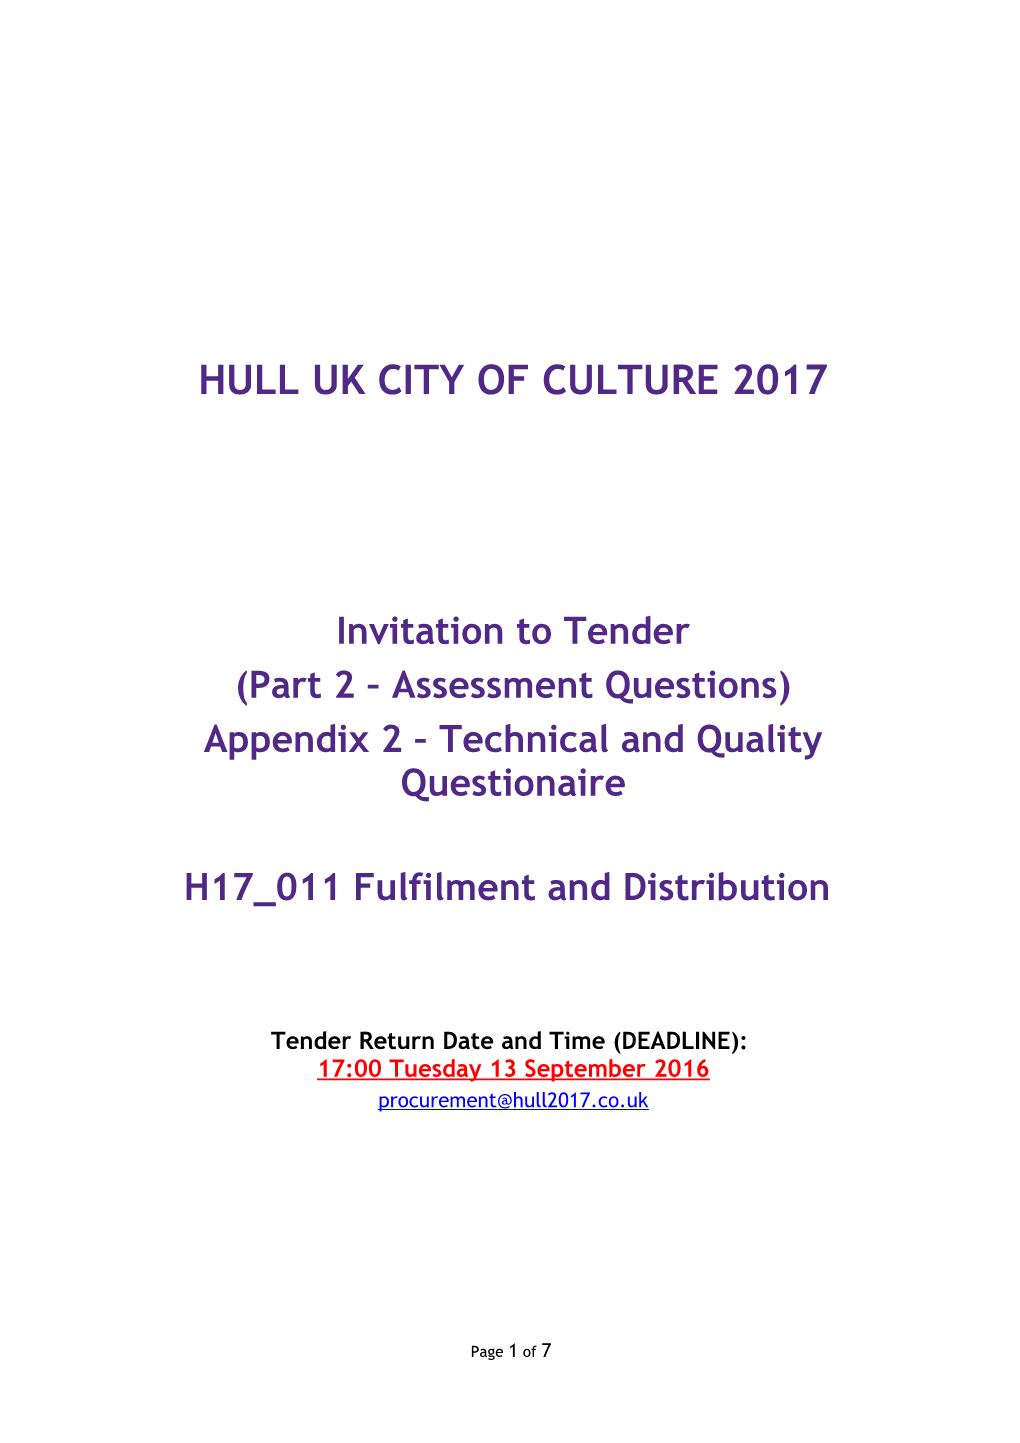 Hull Uk City of Culture 2017